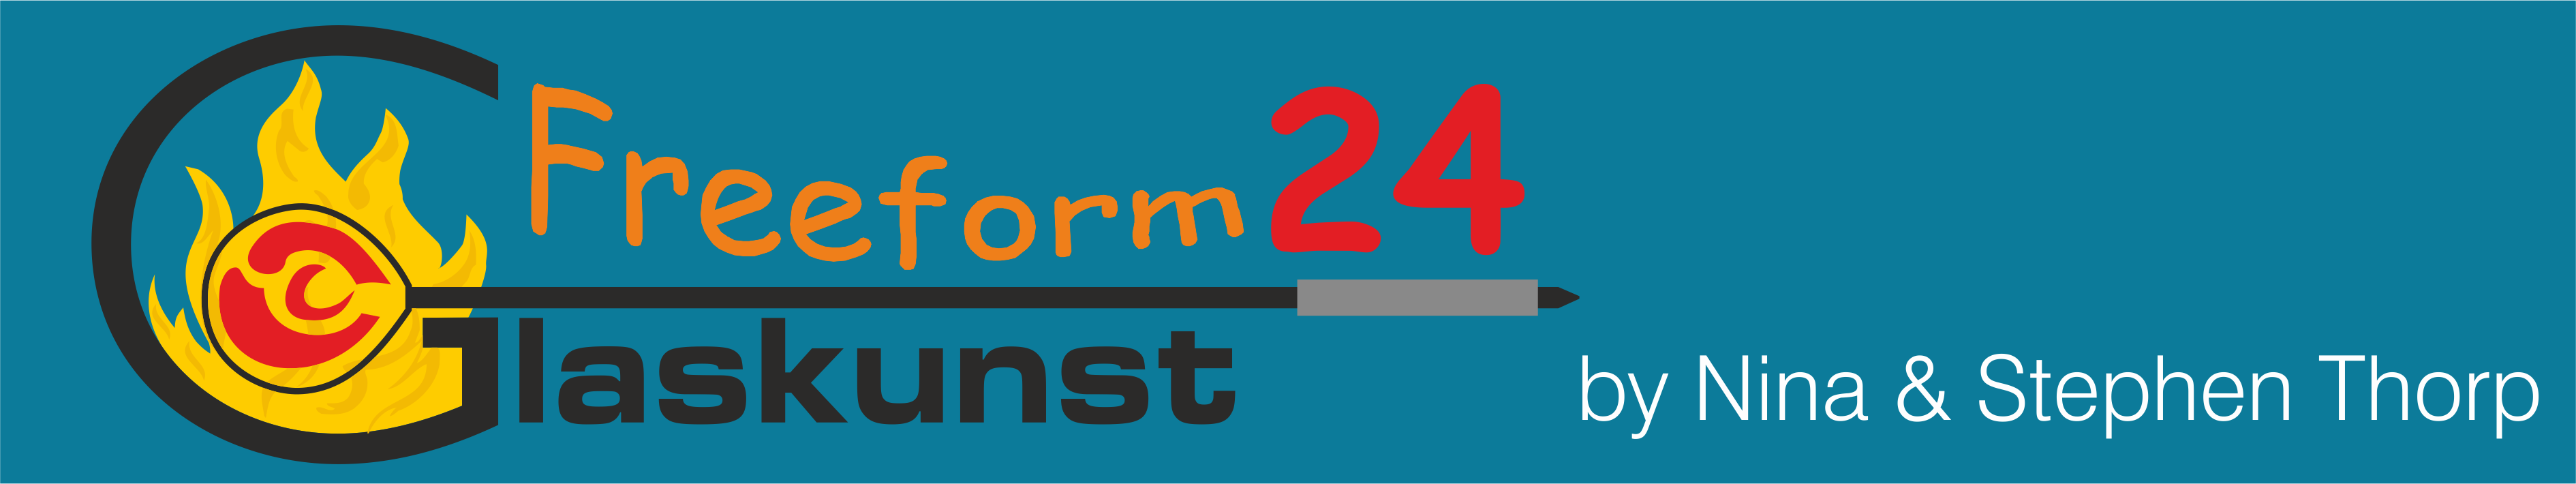 Freeform24-Logo